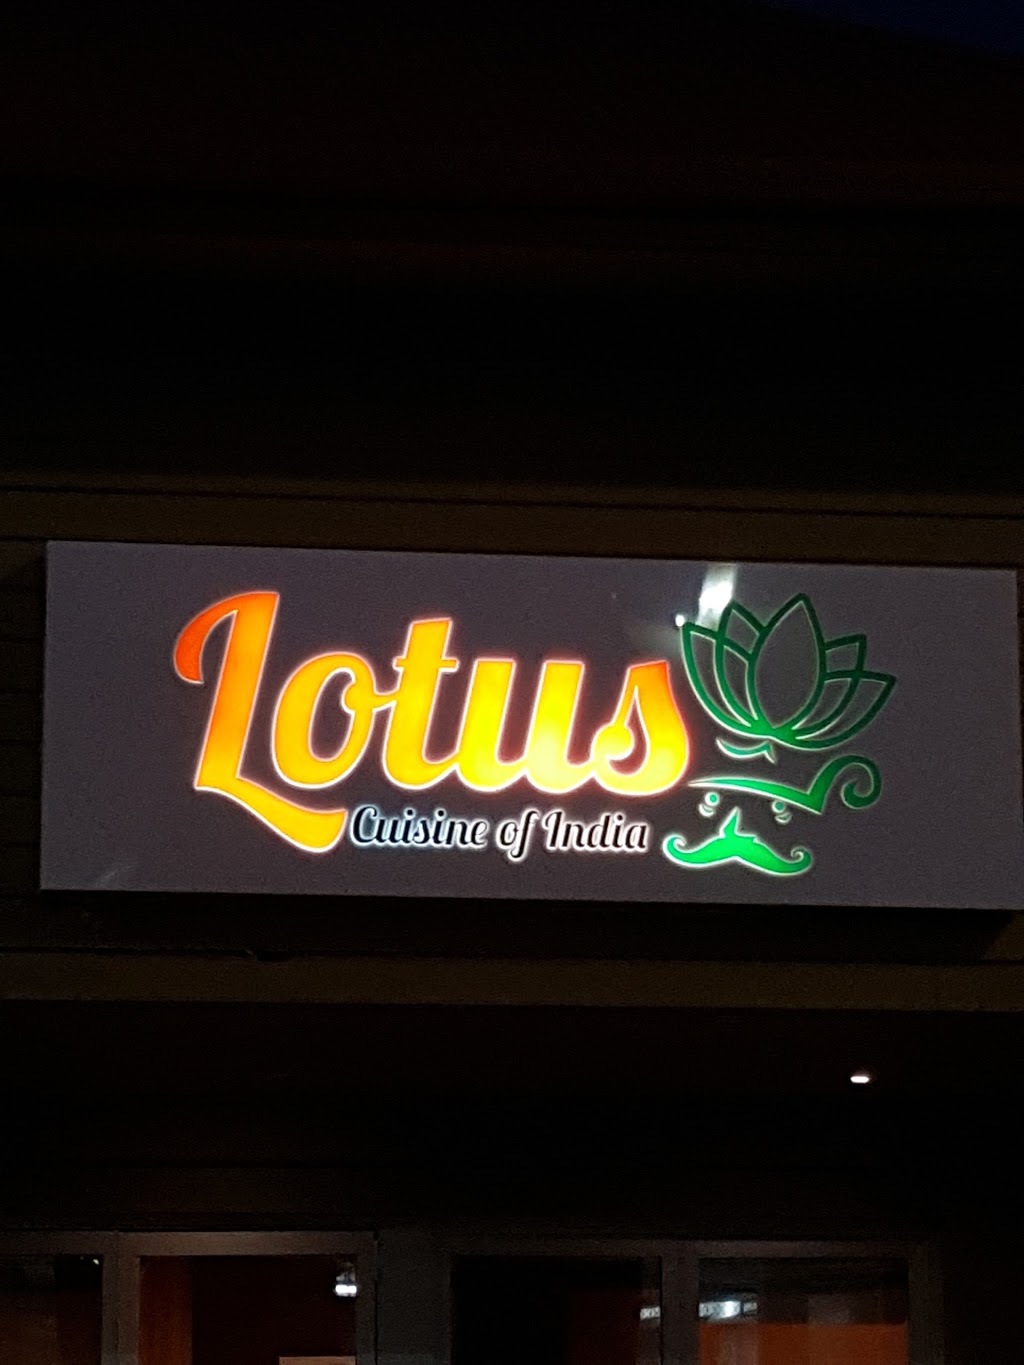 Lotus Cuisine of India | restaurant | 25 Gribble St, Gungahlin ACT 2912, Australia | 0262414558 OR +61 2 6241 4558